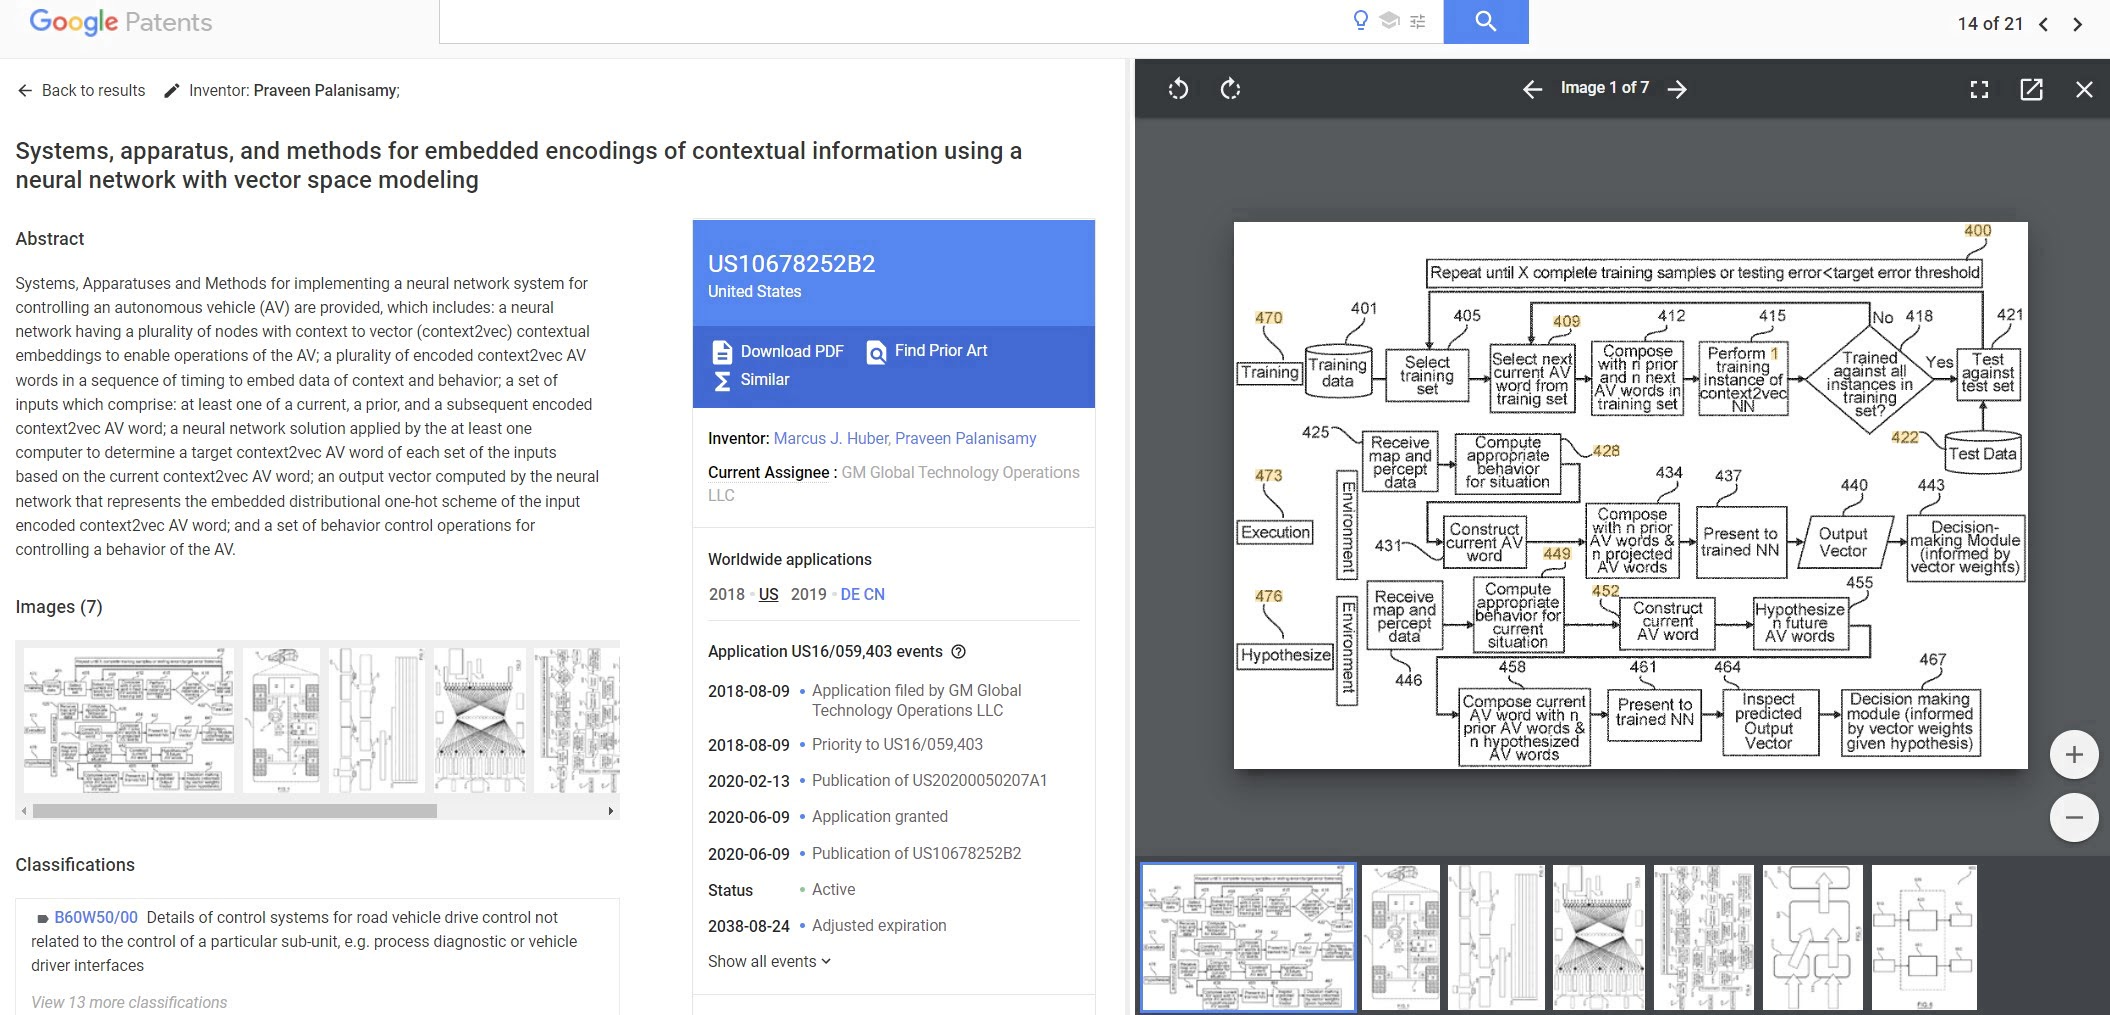 Google patent page sample